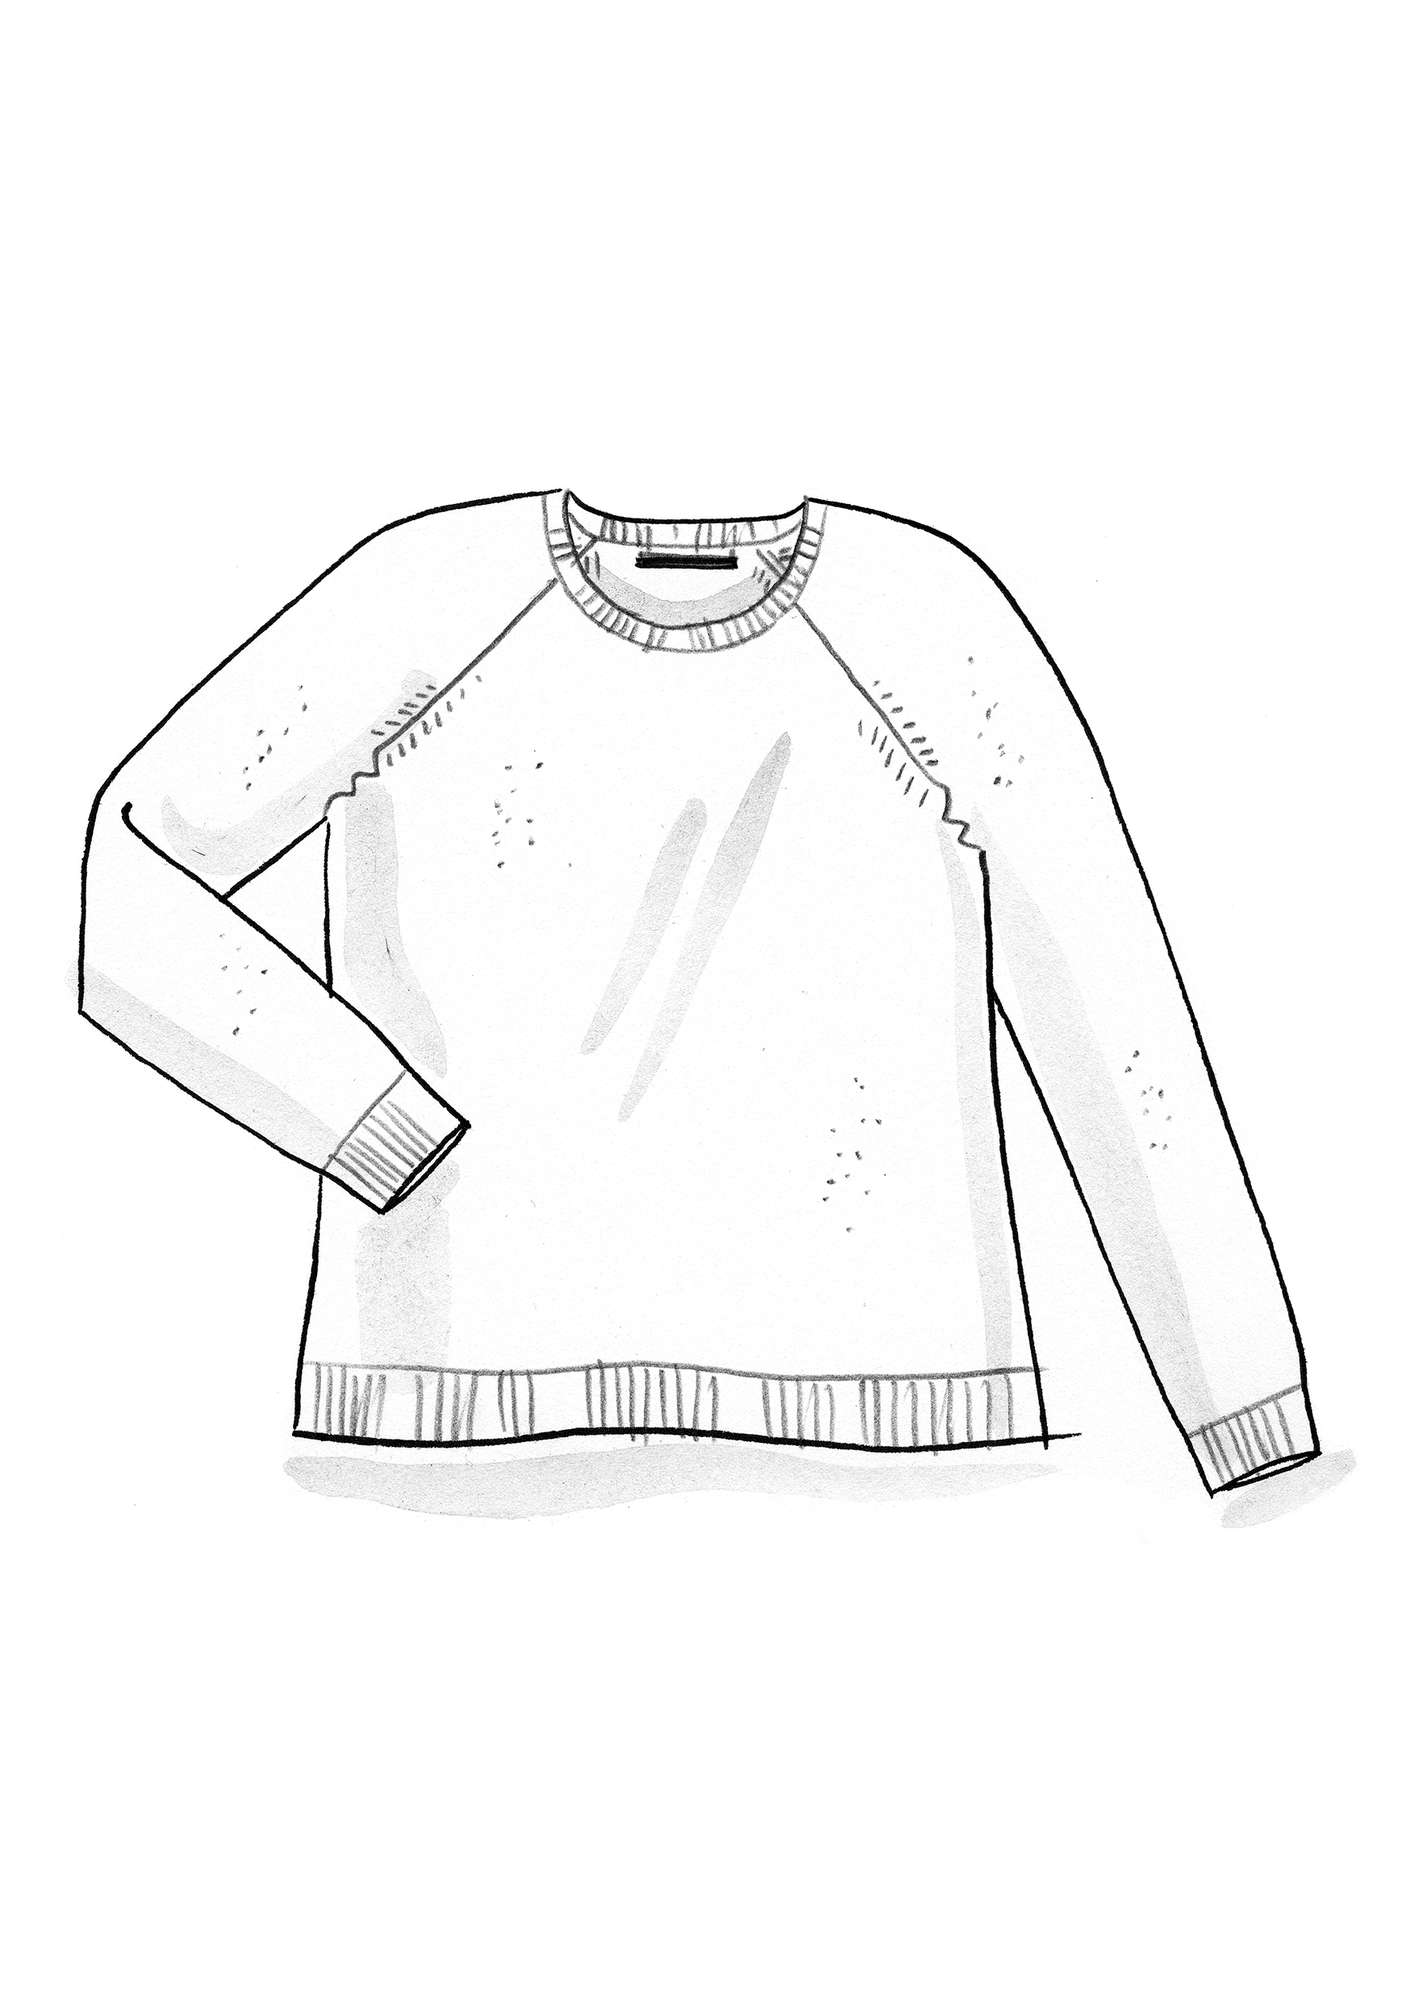 Cashmere sweater natural melange/solid colour